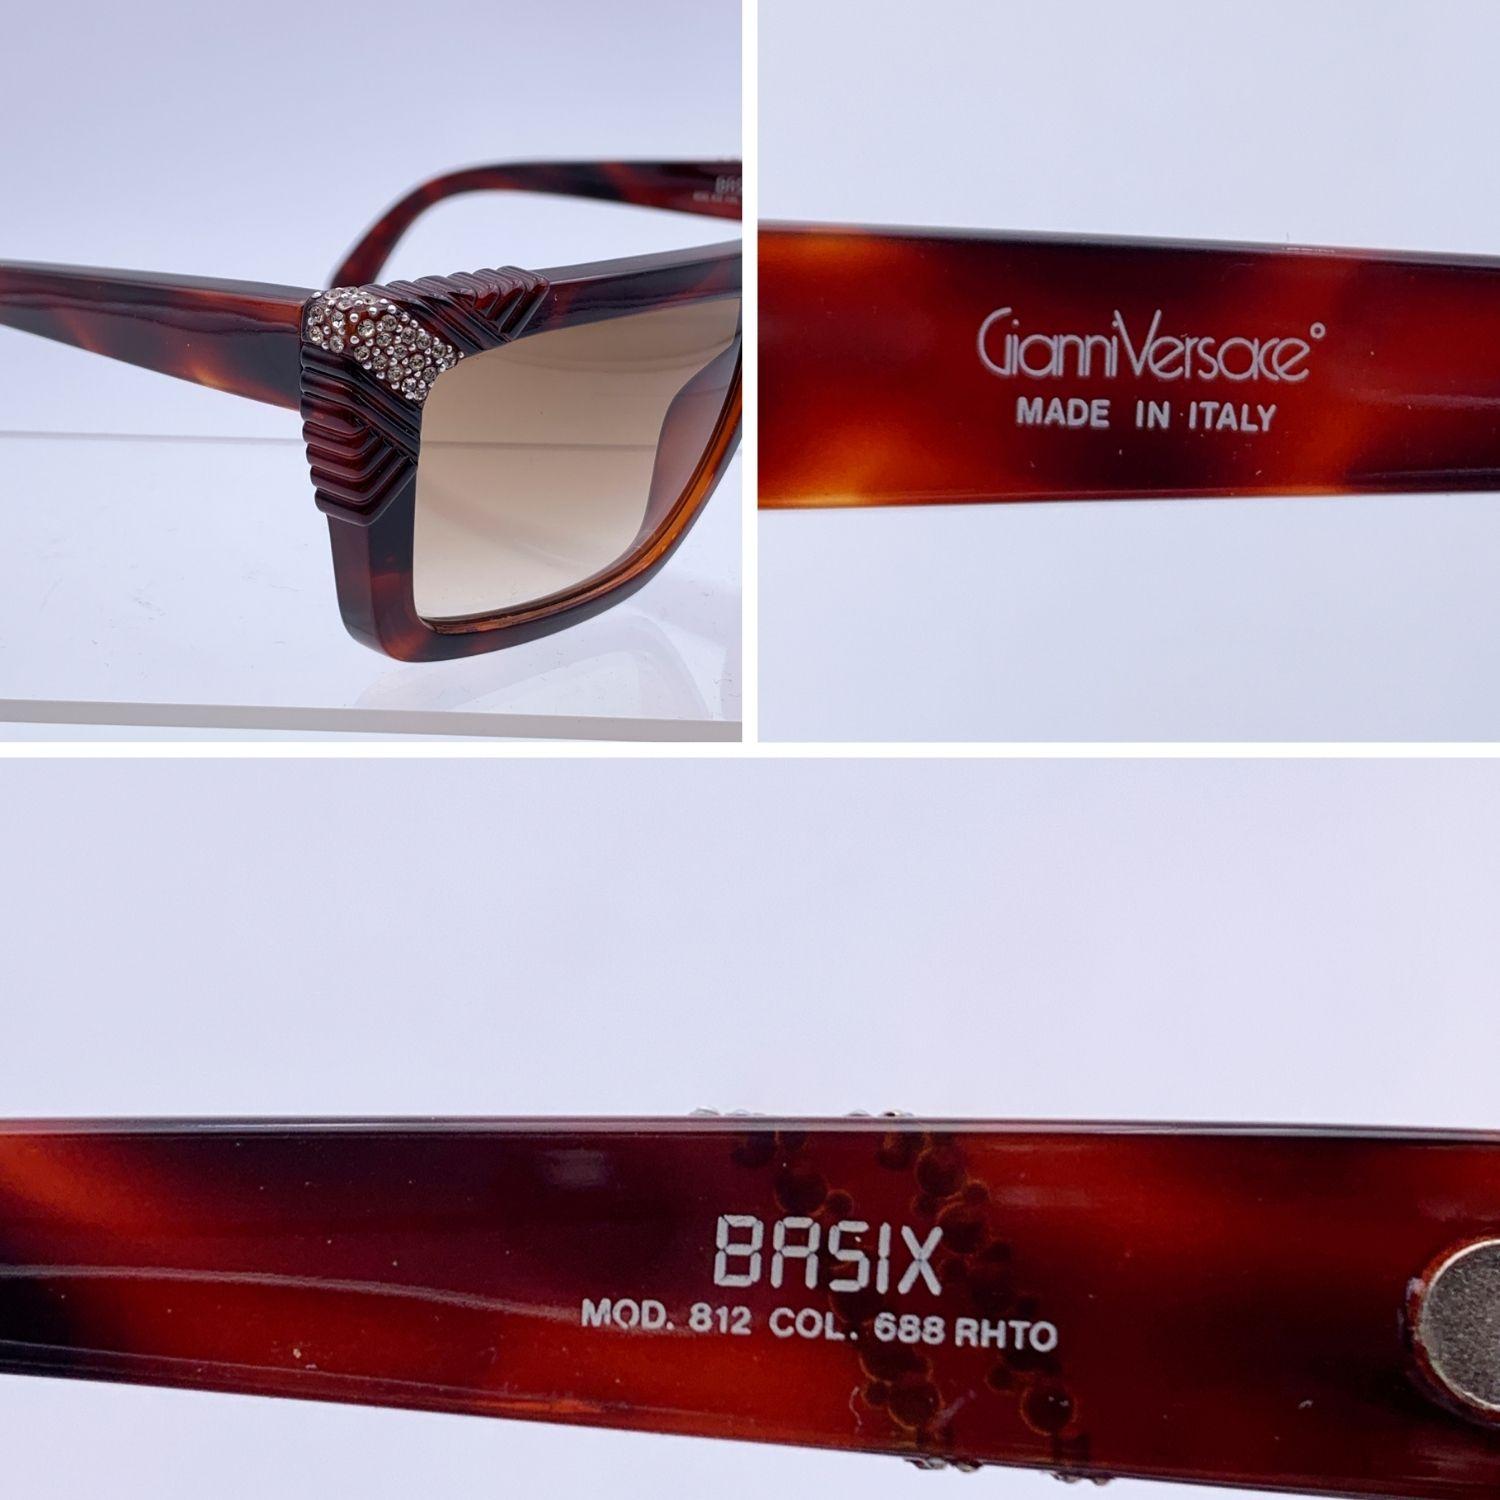 Gianni Versace Vintage Brown Sunglasses Mod. Basix 812 Col.688 For Sale 1